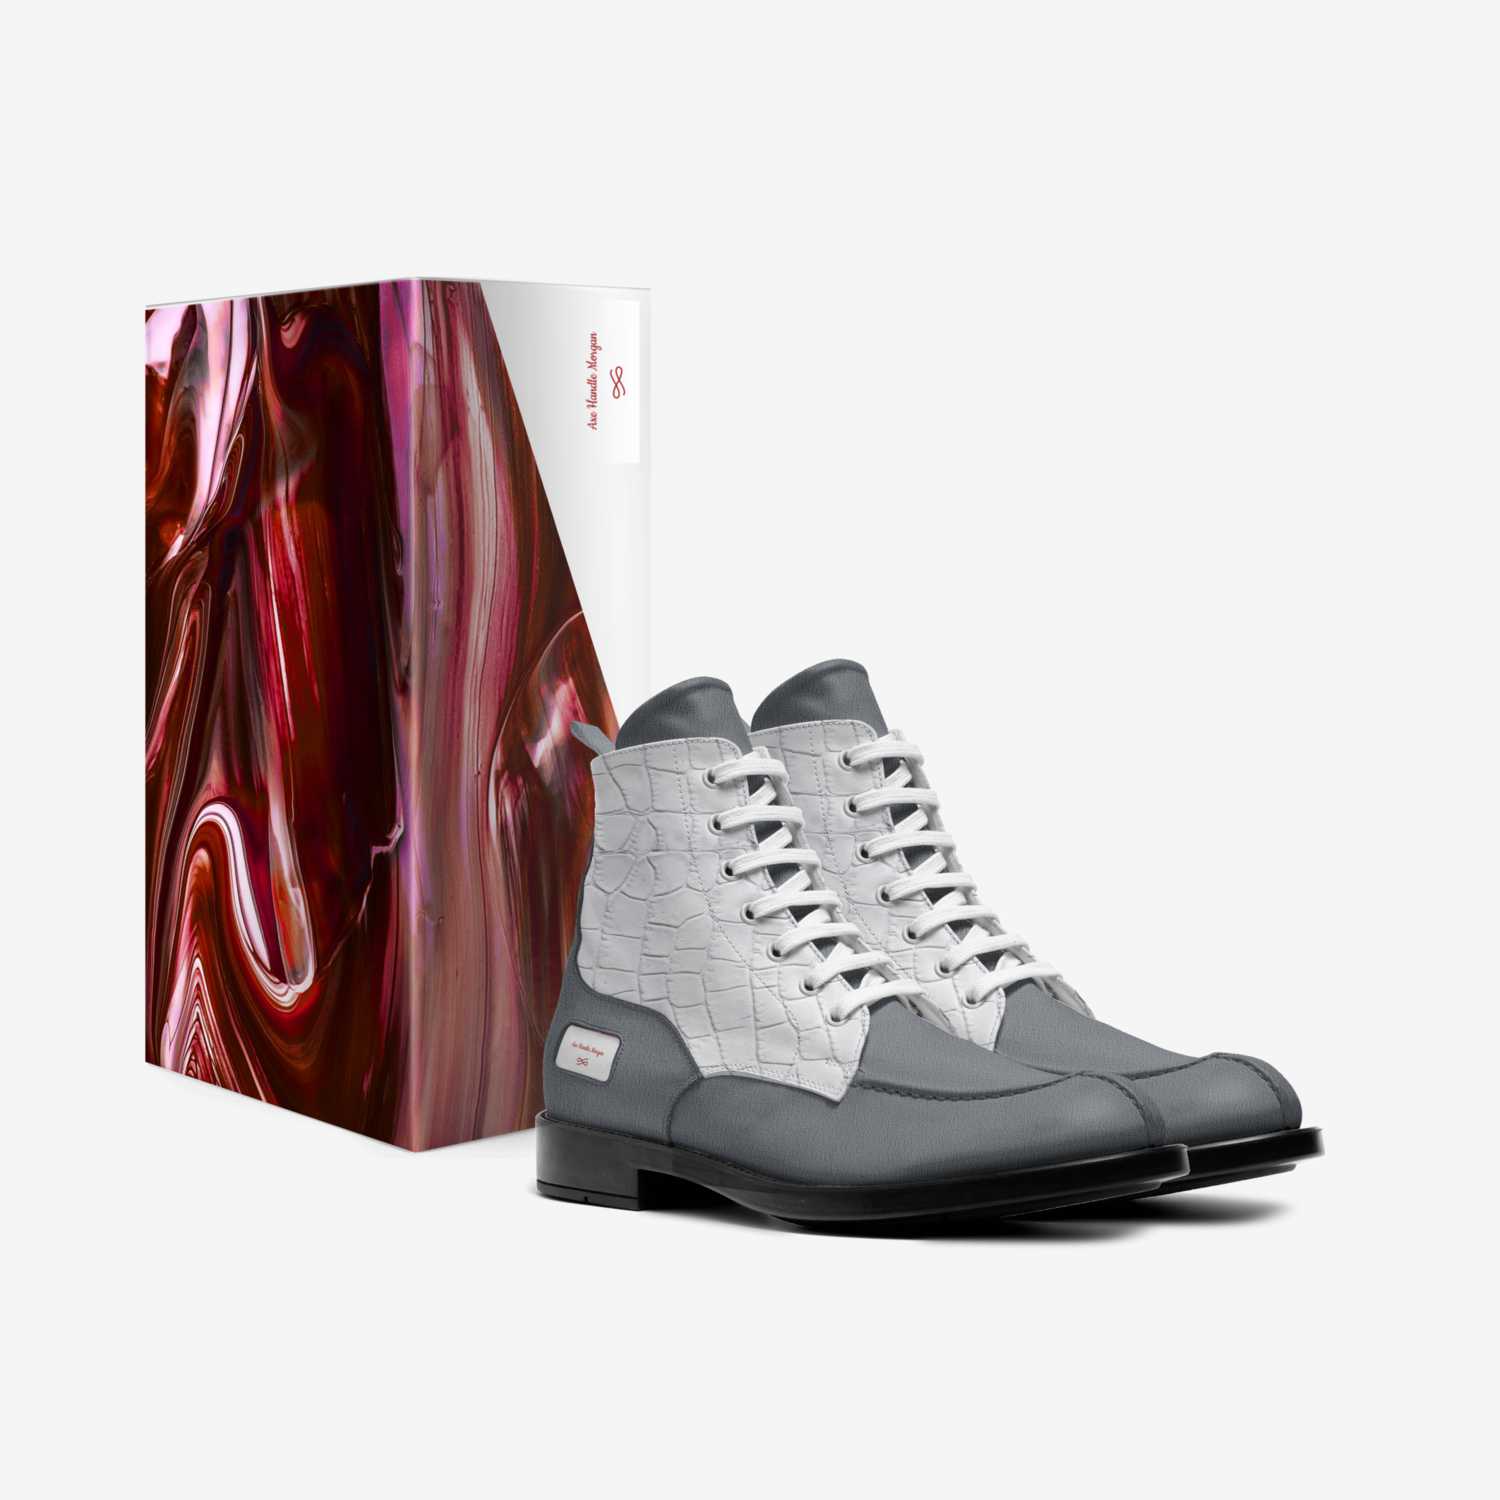 Axe Handle Morgan custom made in Italy shoes by Mark Mcewan | Box view